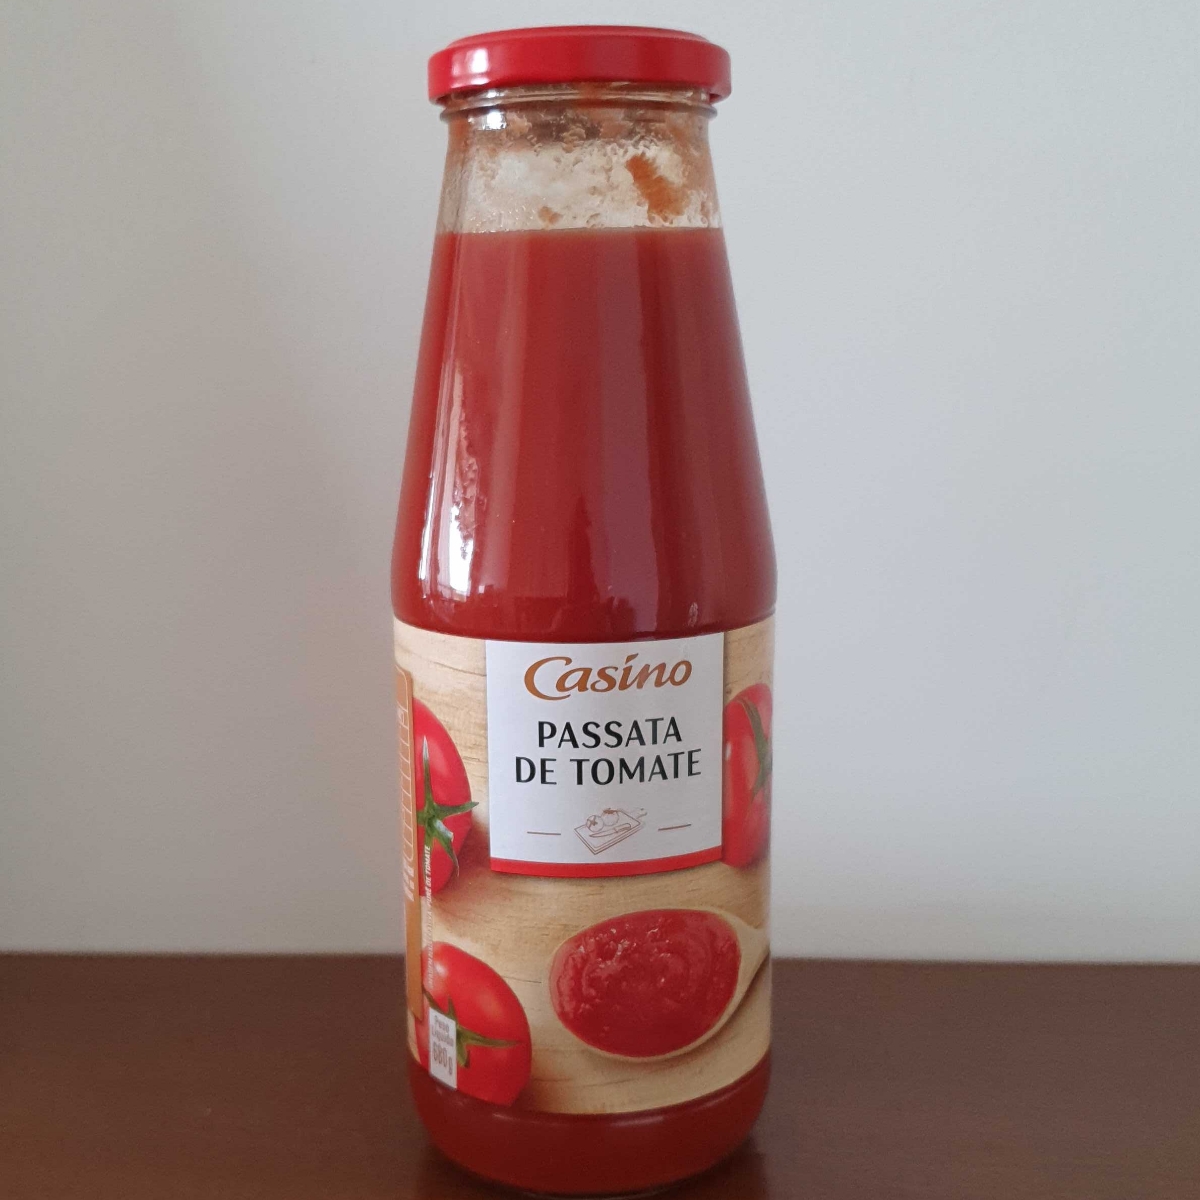 Casino Passata de tomate Reviews | abillion